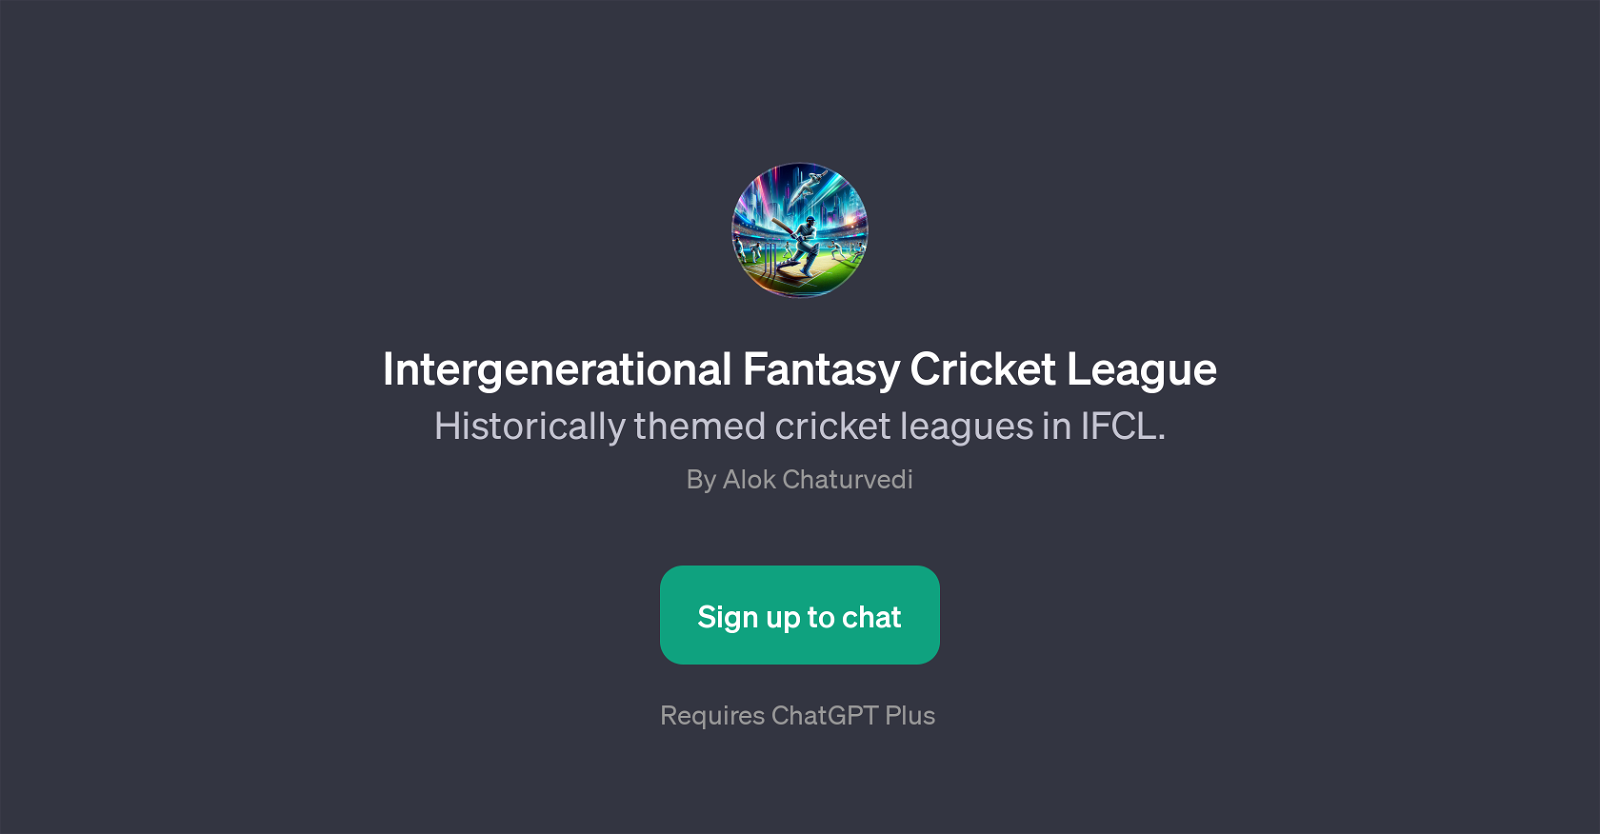 Intergenerational Fantasy Cricket League website